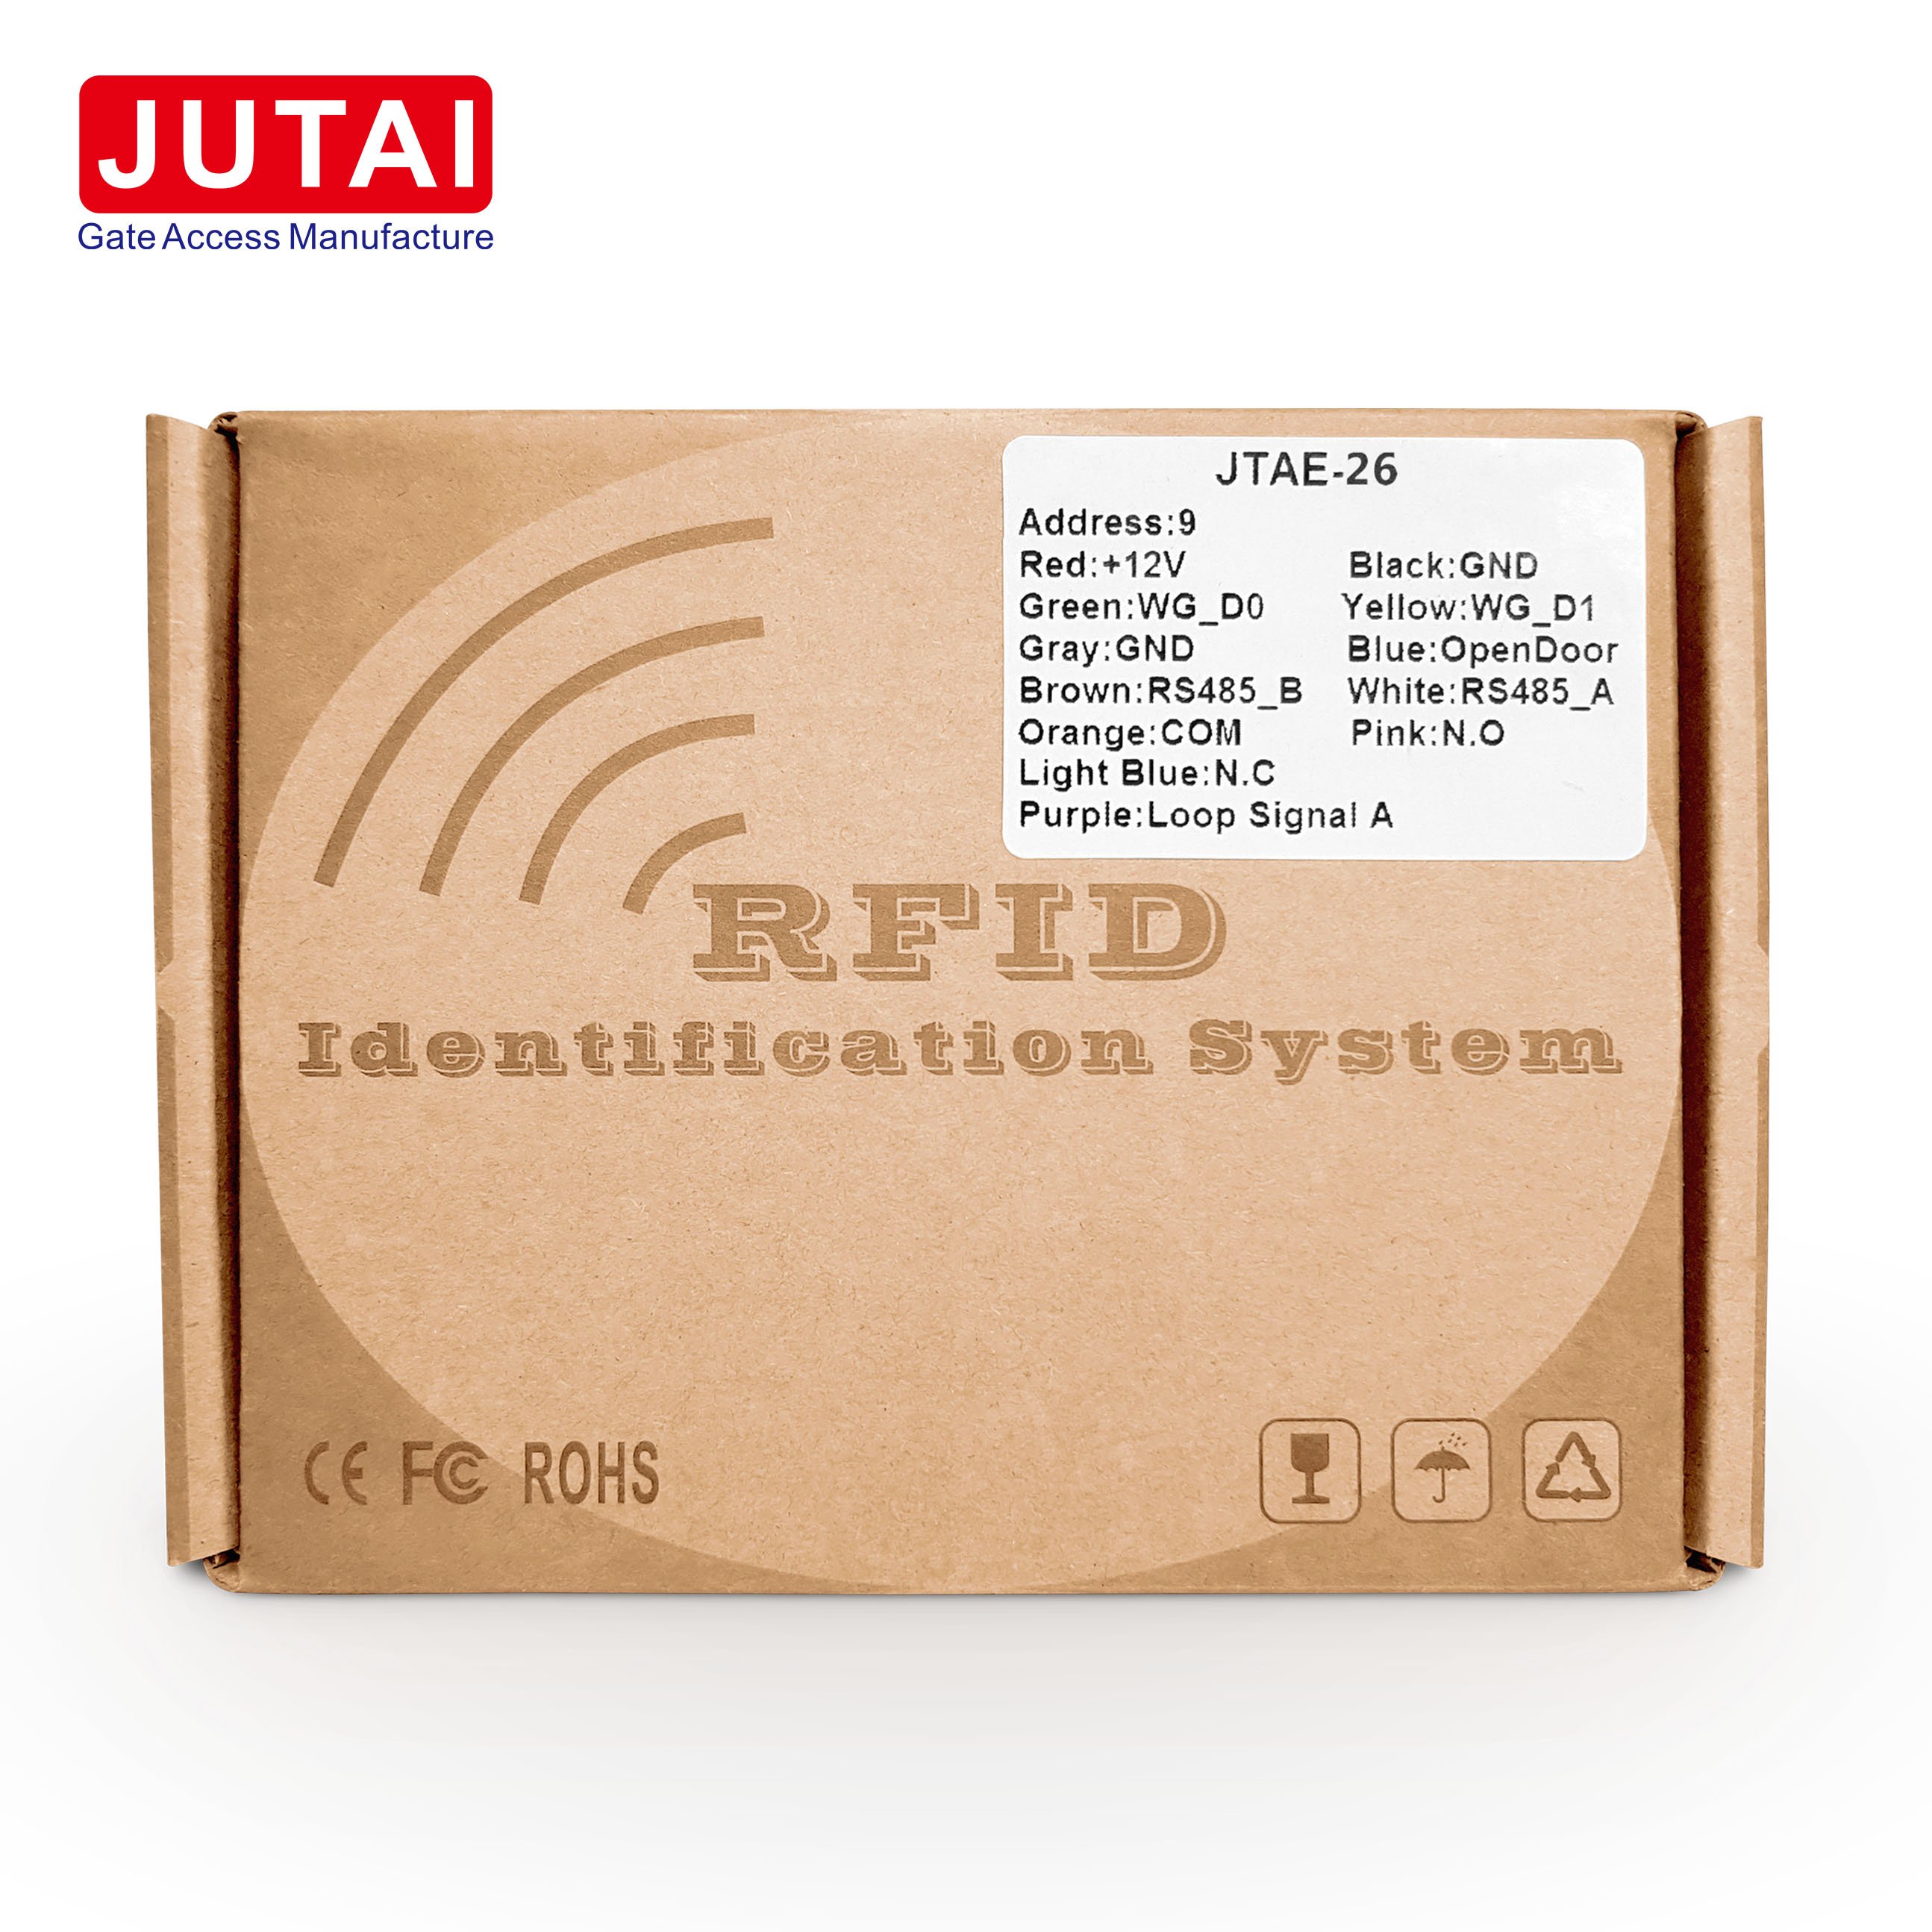 RFID Semi-Passive Mid Range Reader Standalone Access Control